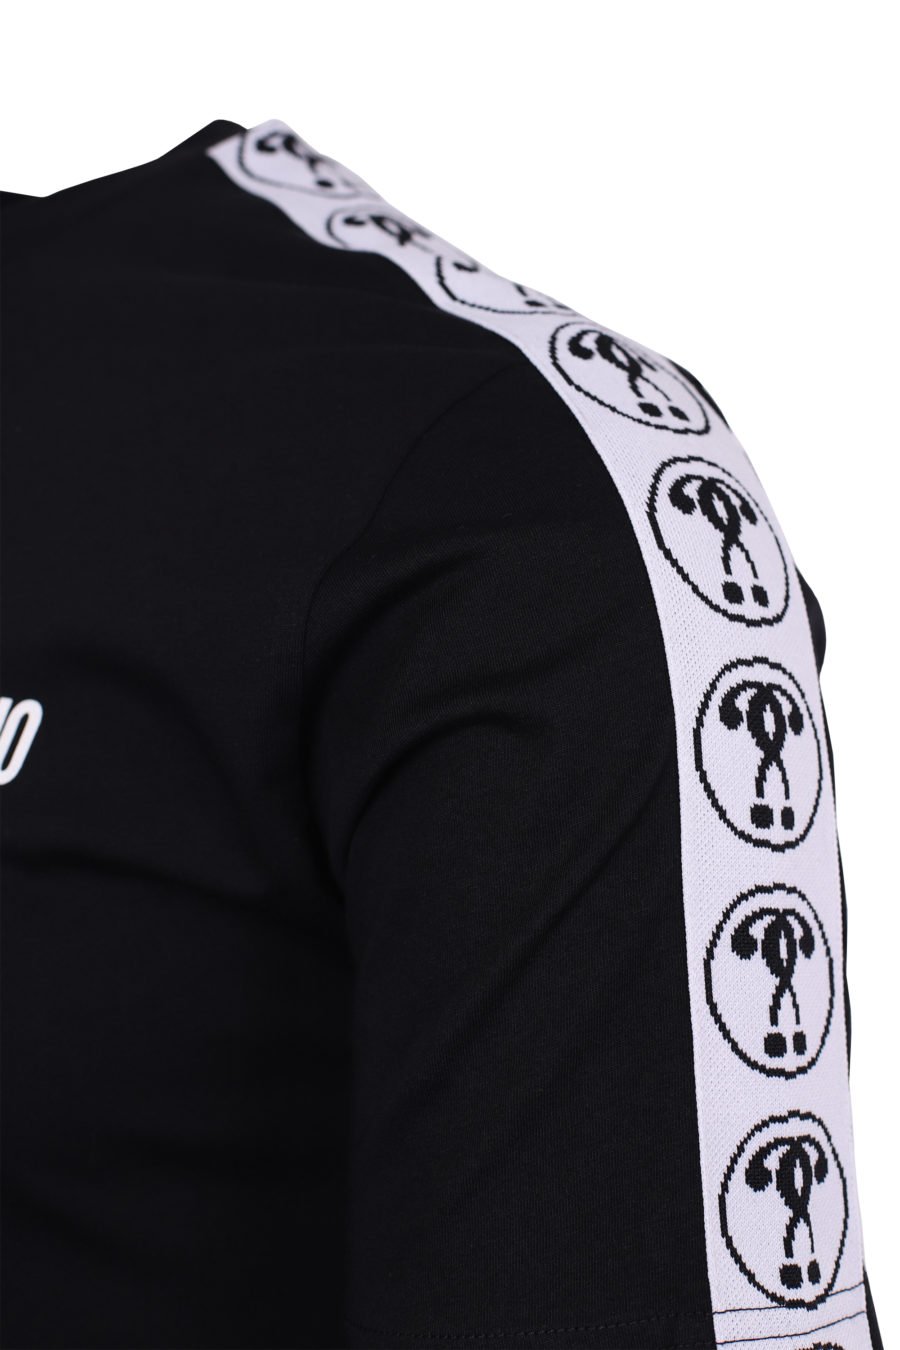 Camiseta negra logo blanco parte delantera y mangas - IMG 9989